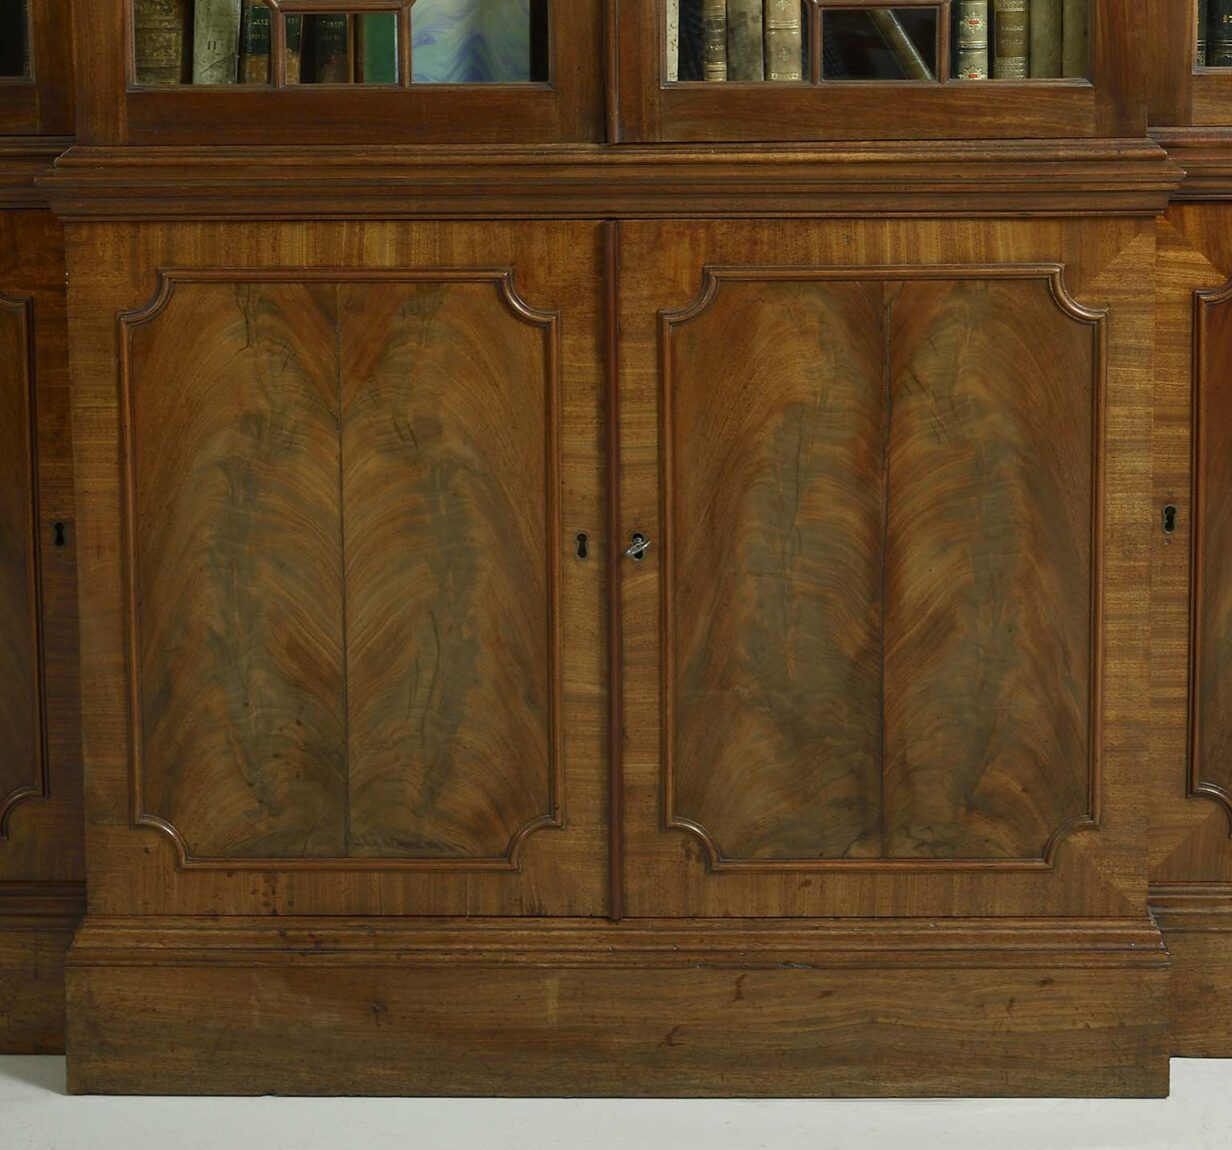 Late 18th century chippendale period mahogany bookcase